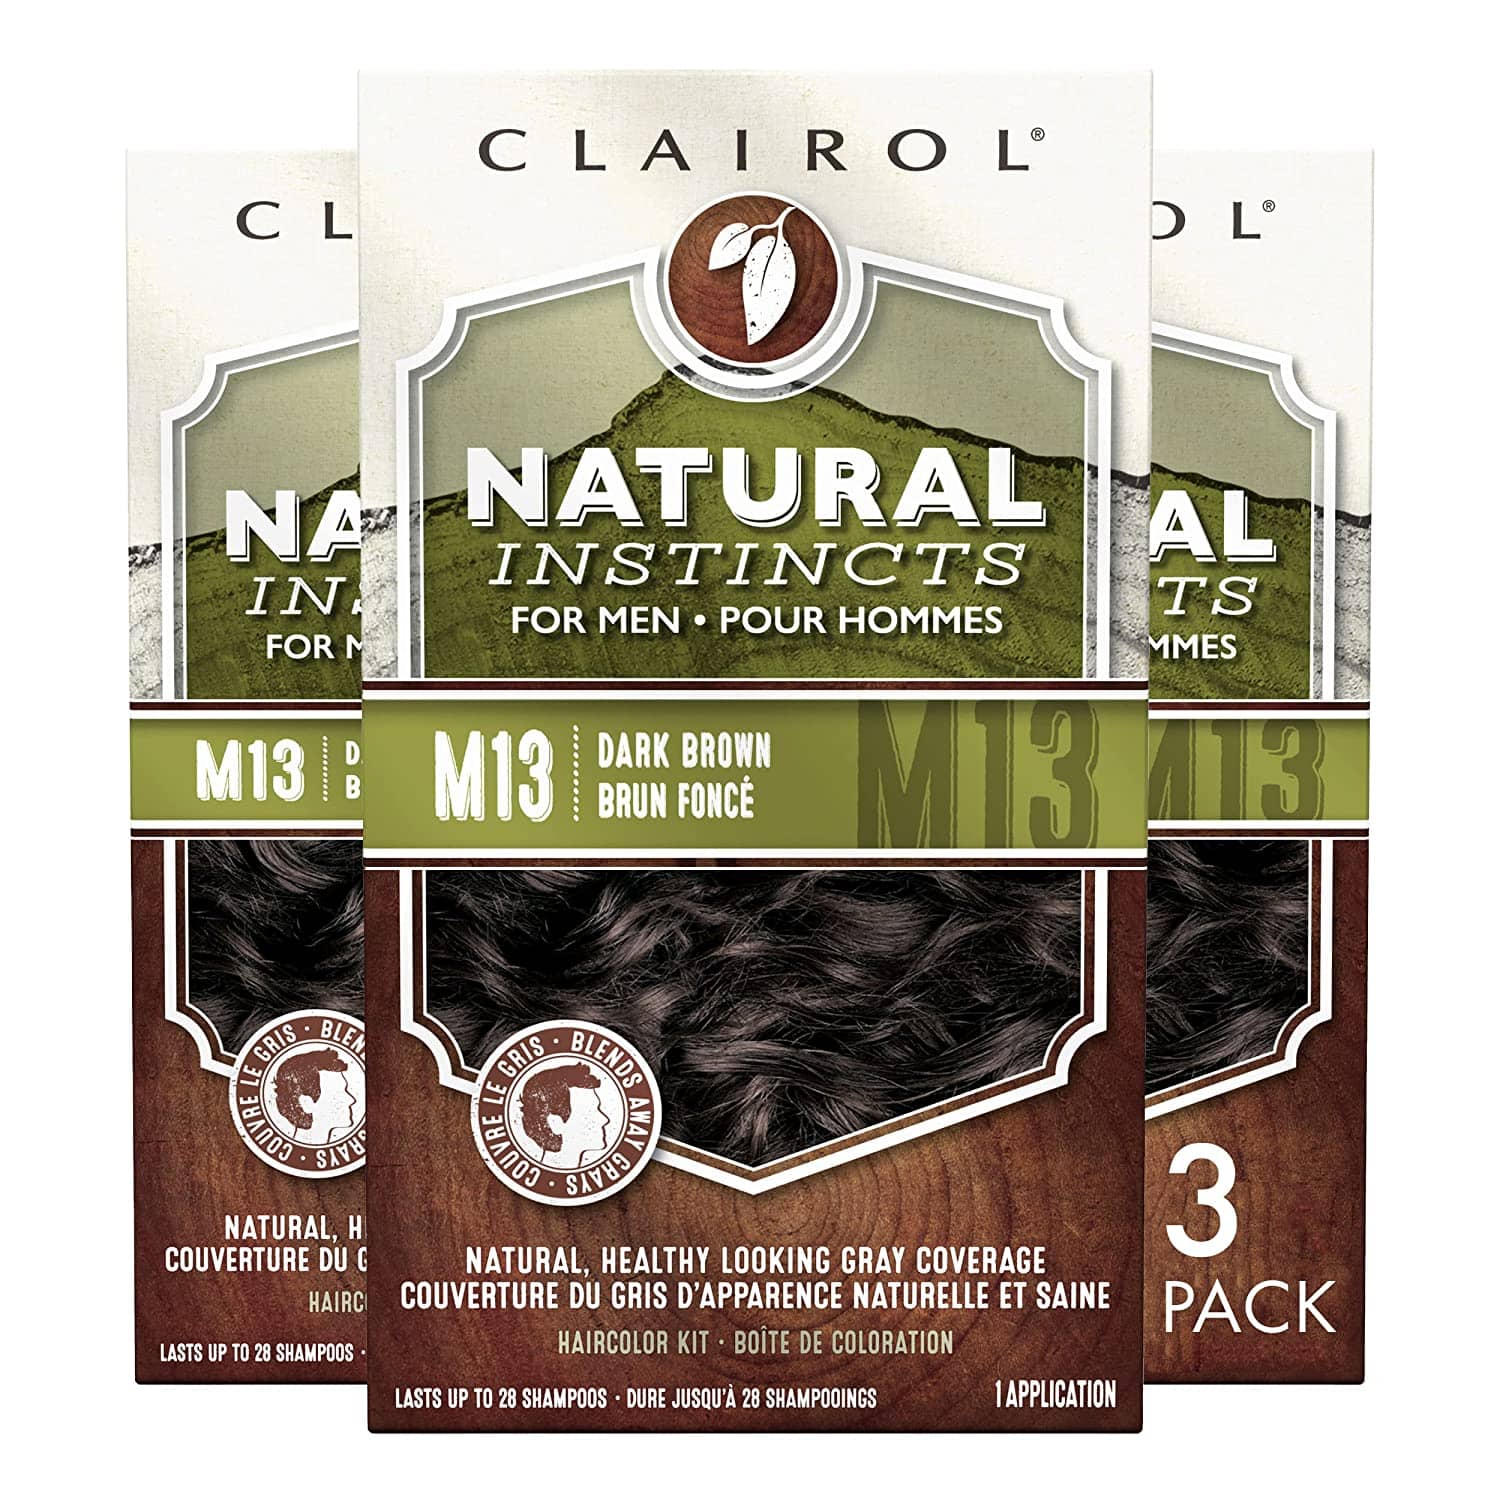 Clairol Natural Instincts Semi-Permanent Hair Dye for Men